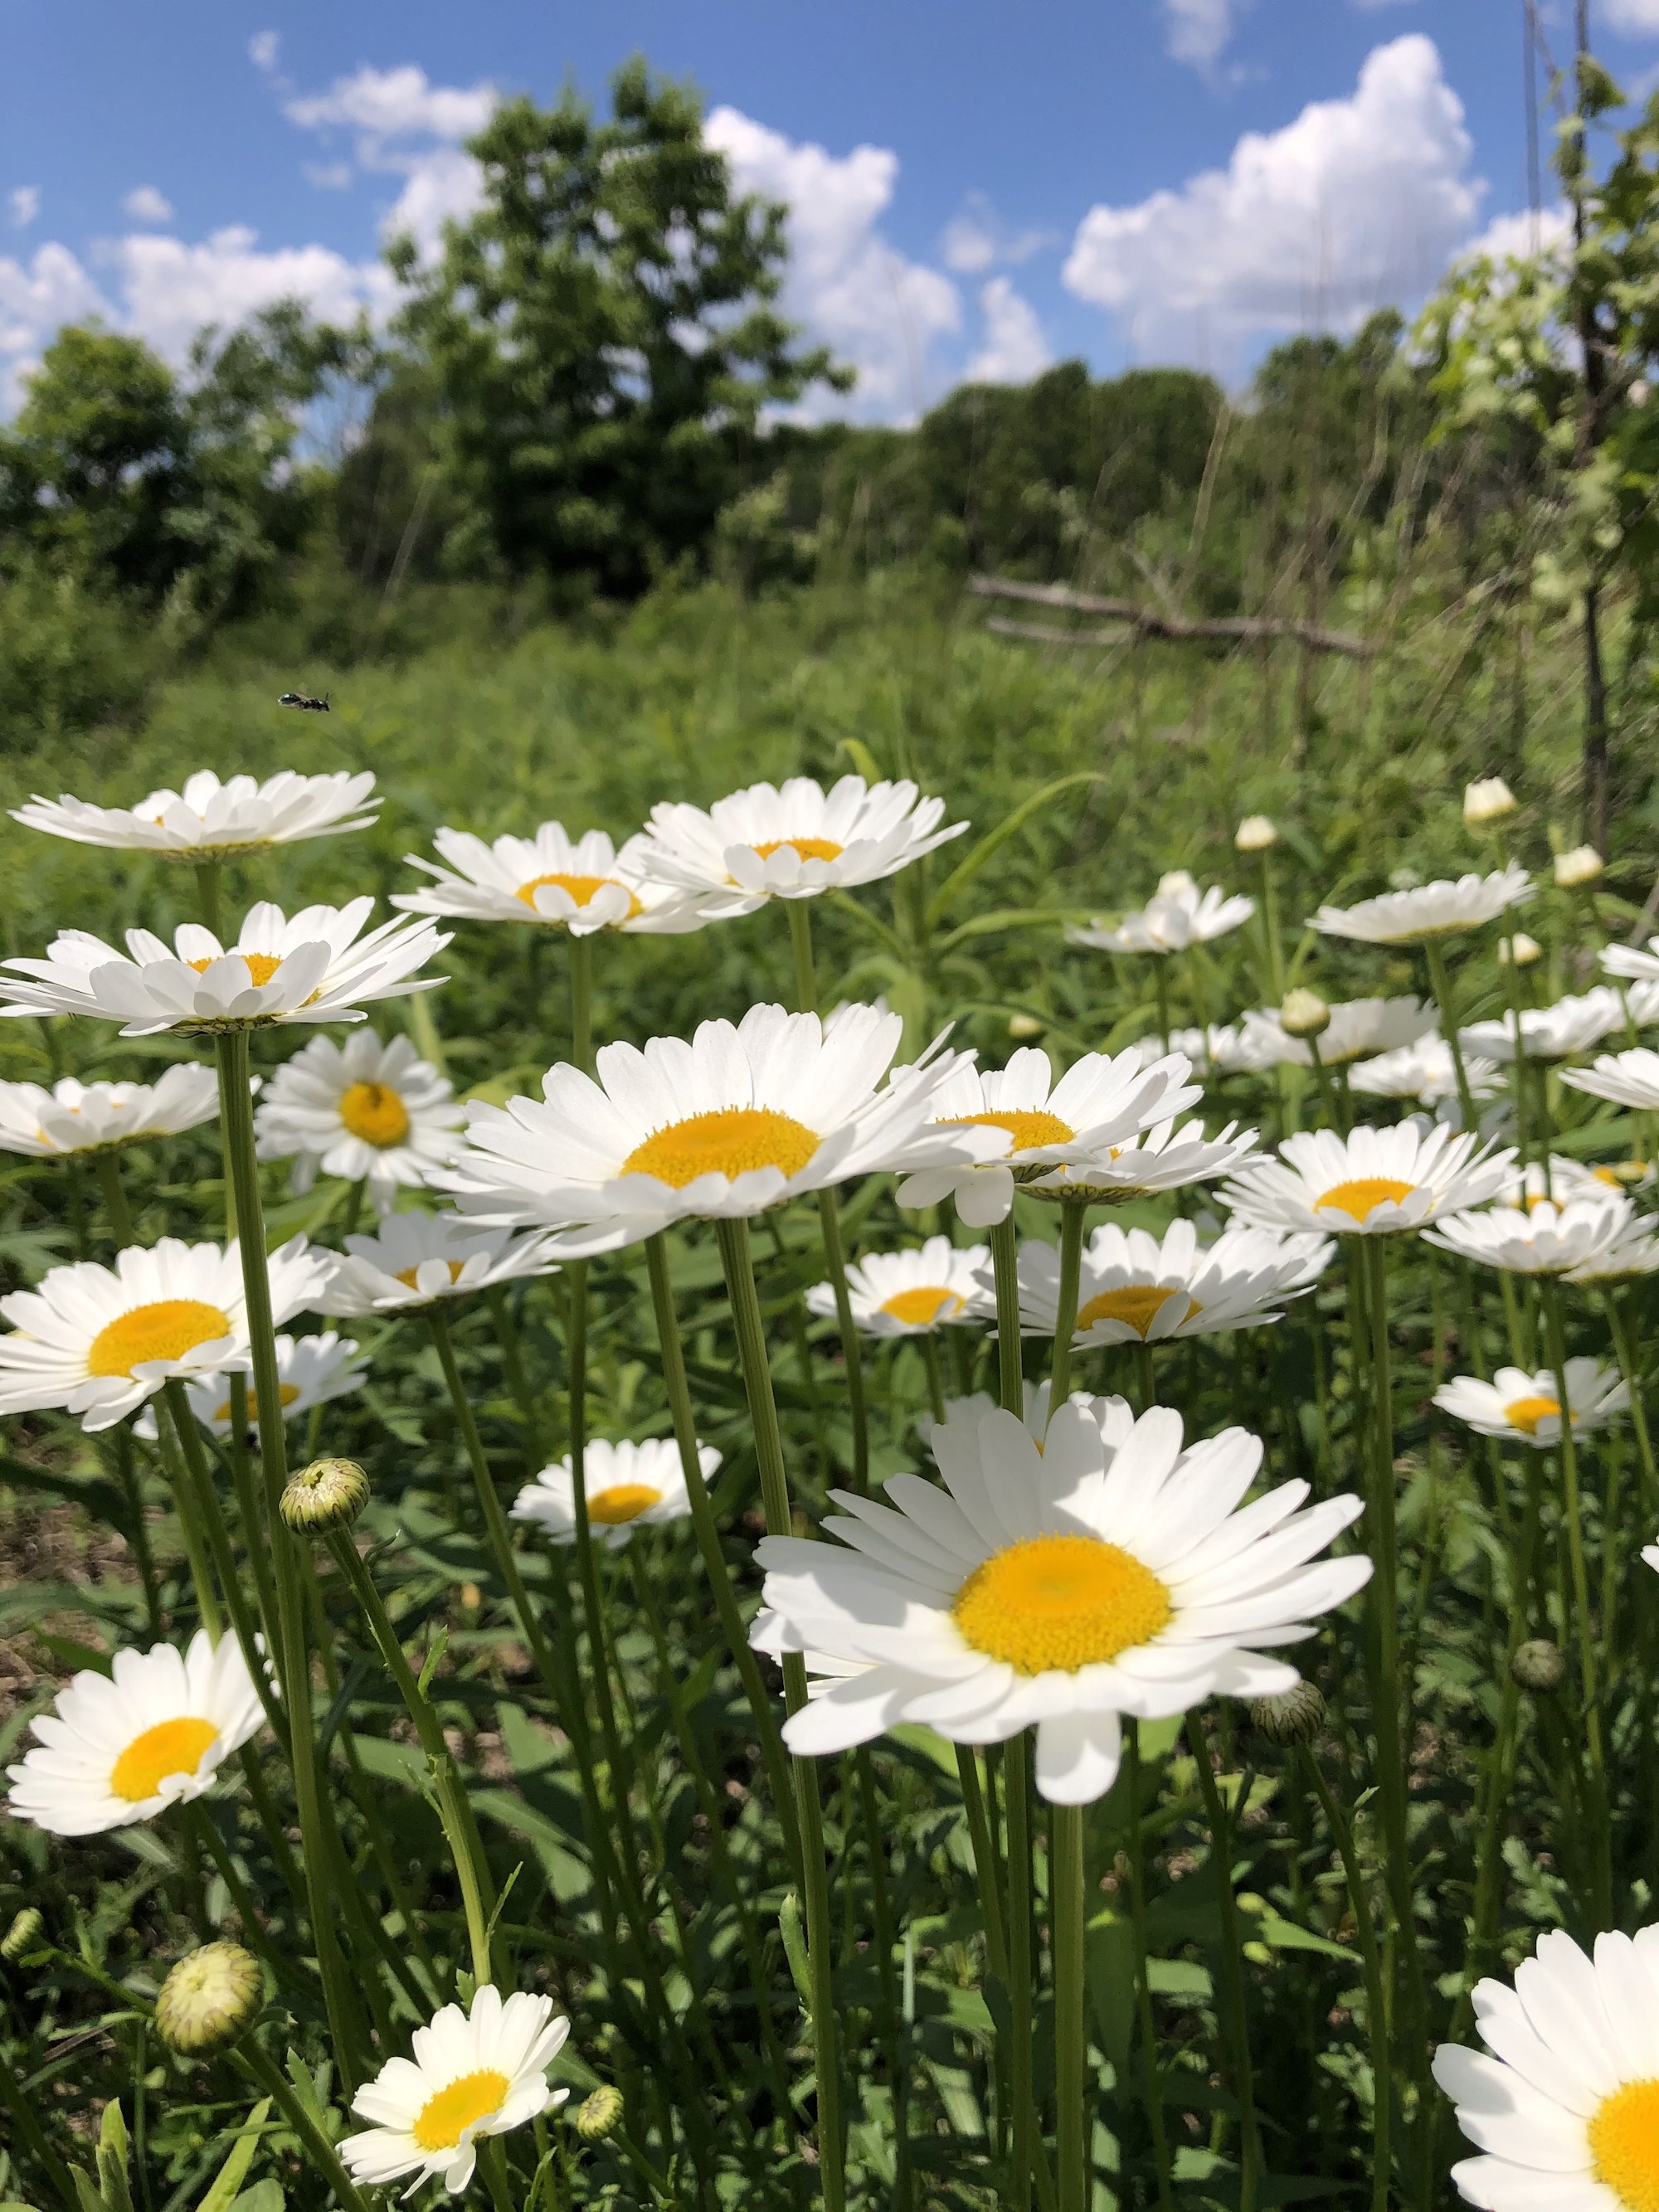 Ox-eye Daisies in UW Arboretum's Greene Prairie in Madison, Wisconsin on June 1, 2021.